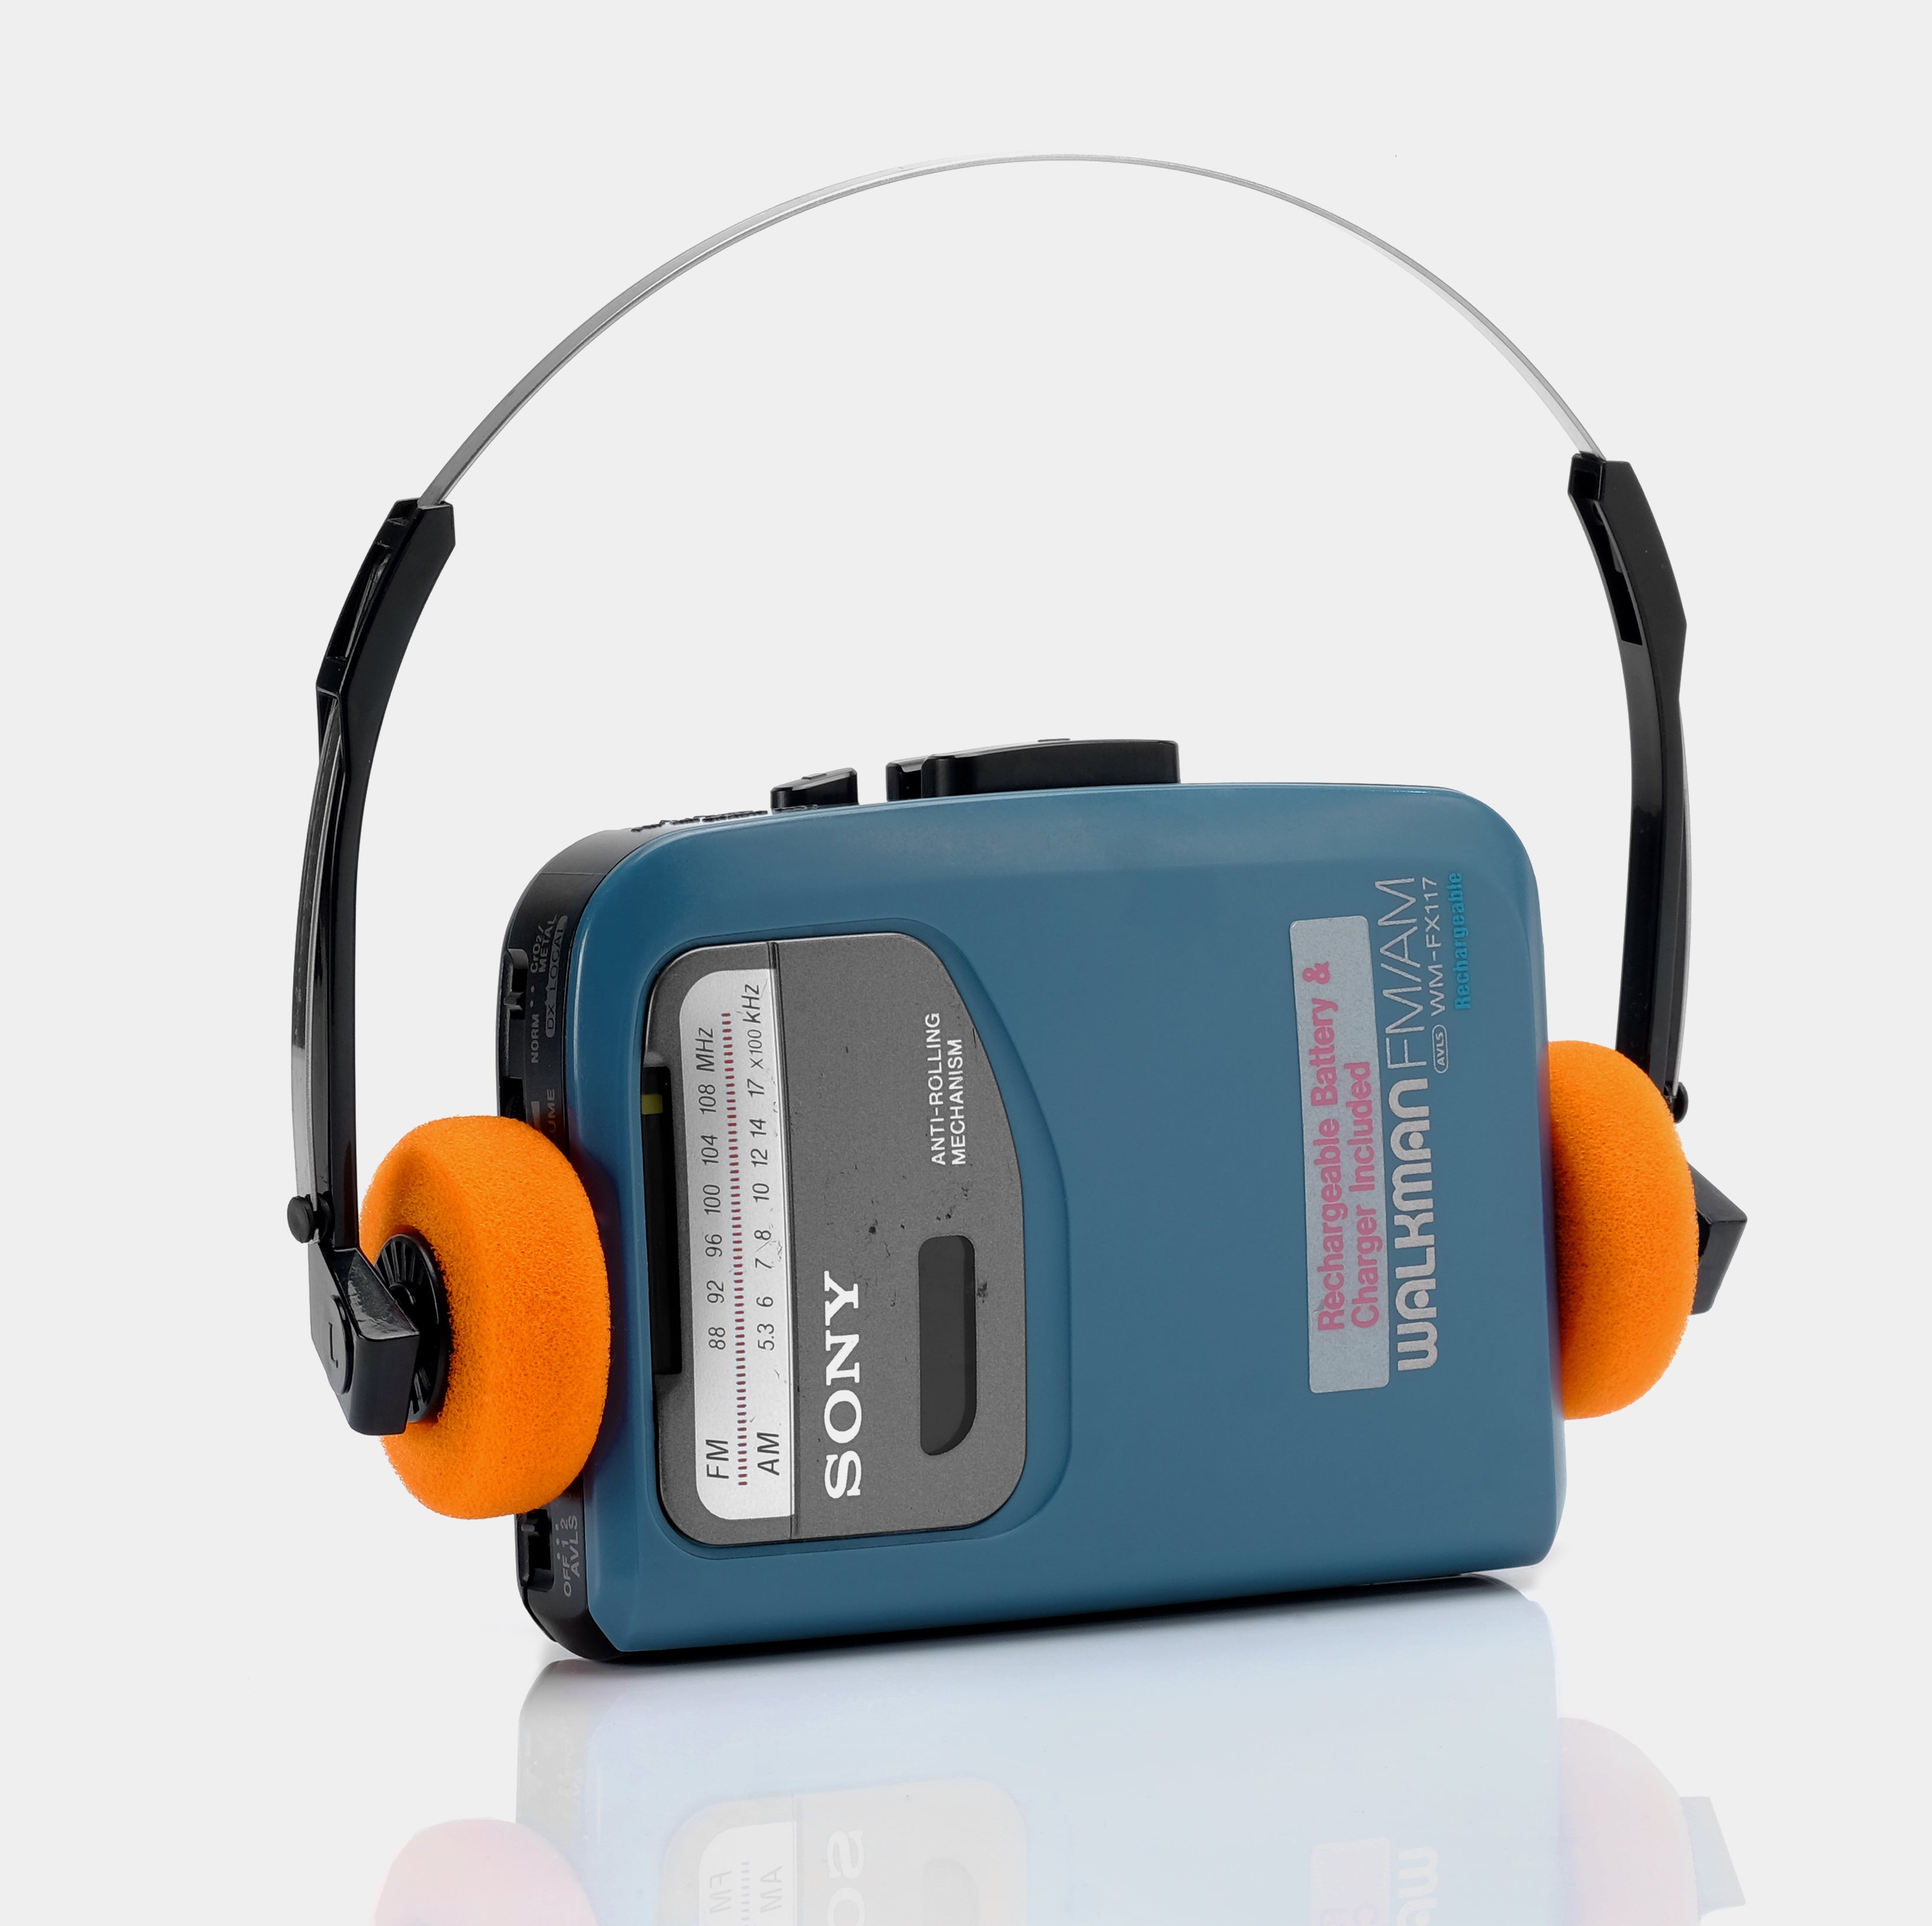 Sony Walkman WM-FX117 AM/FM Portable Cassette Player